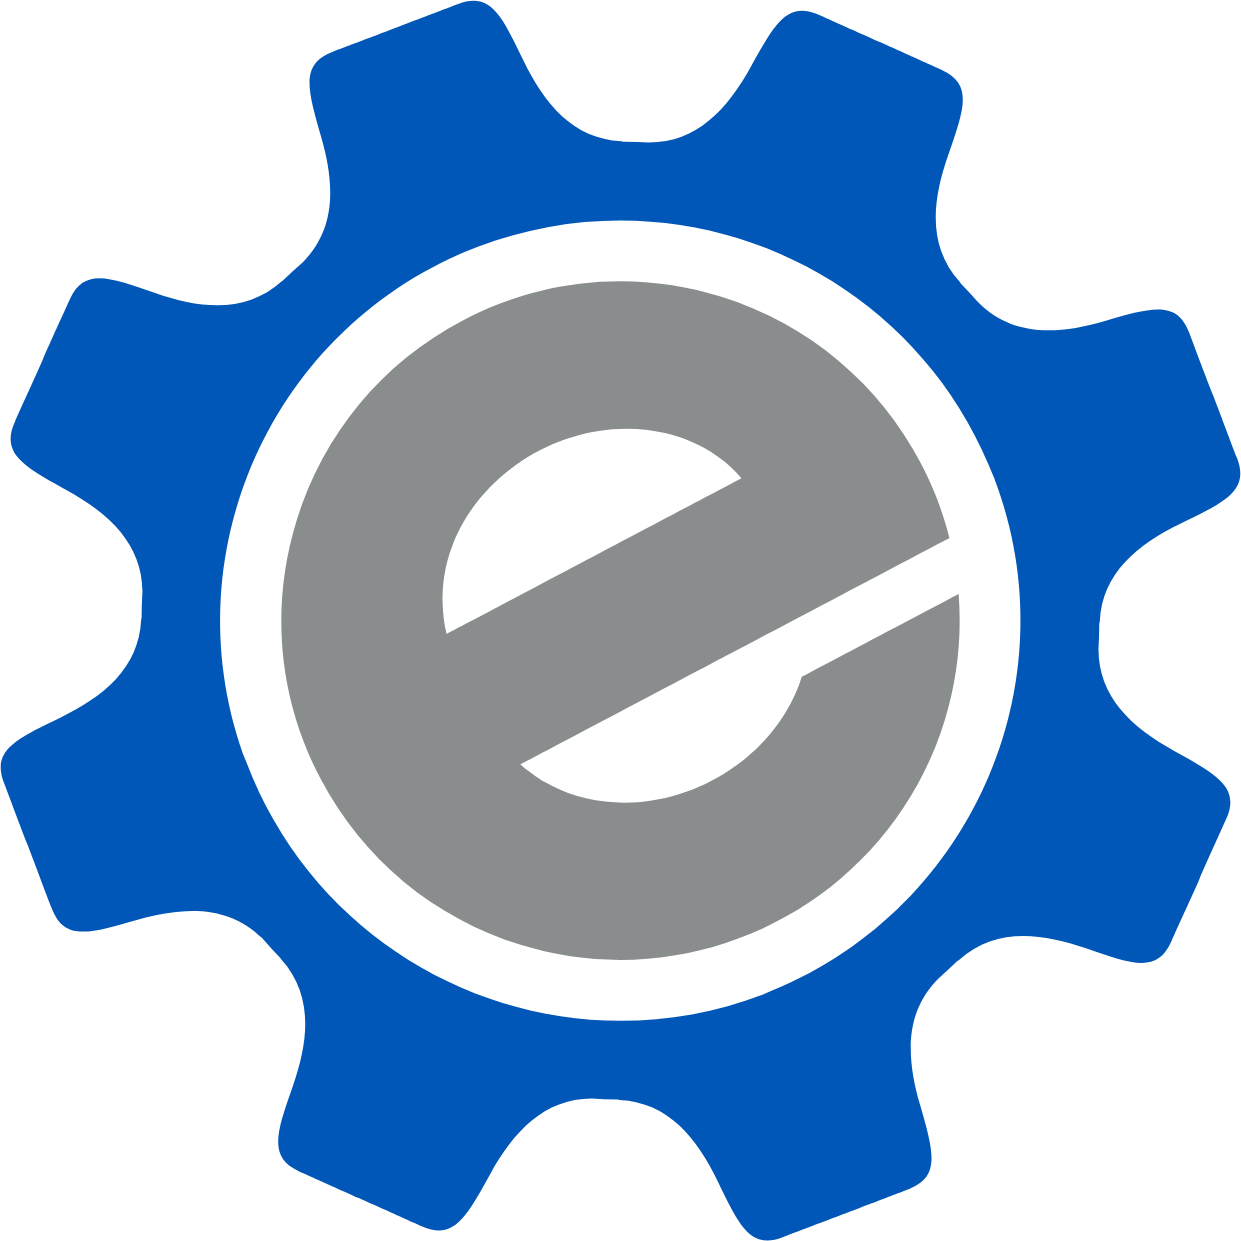 Essent Group logo (transparent PNG)